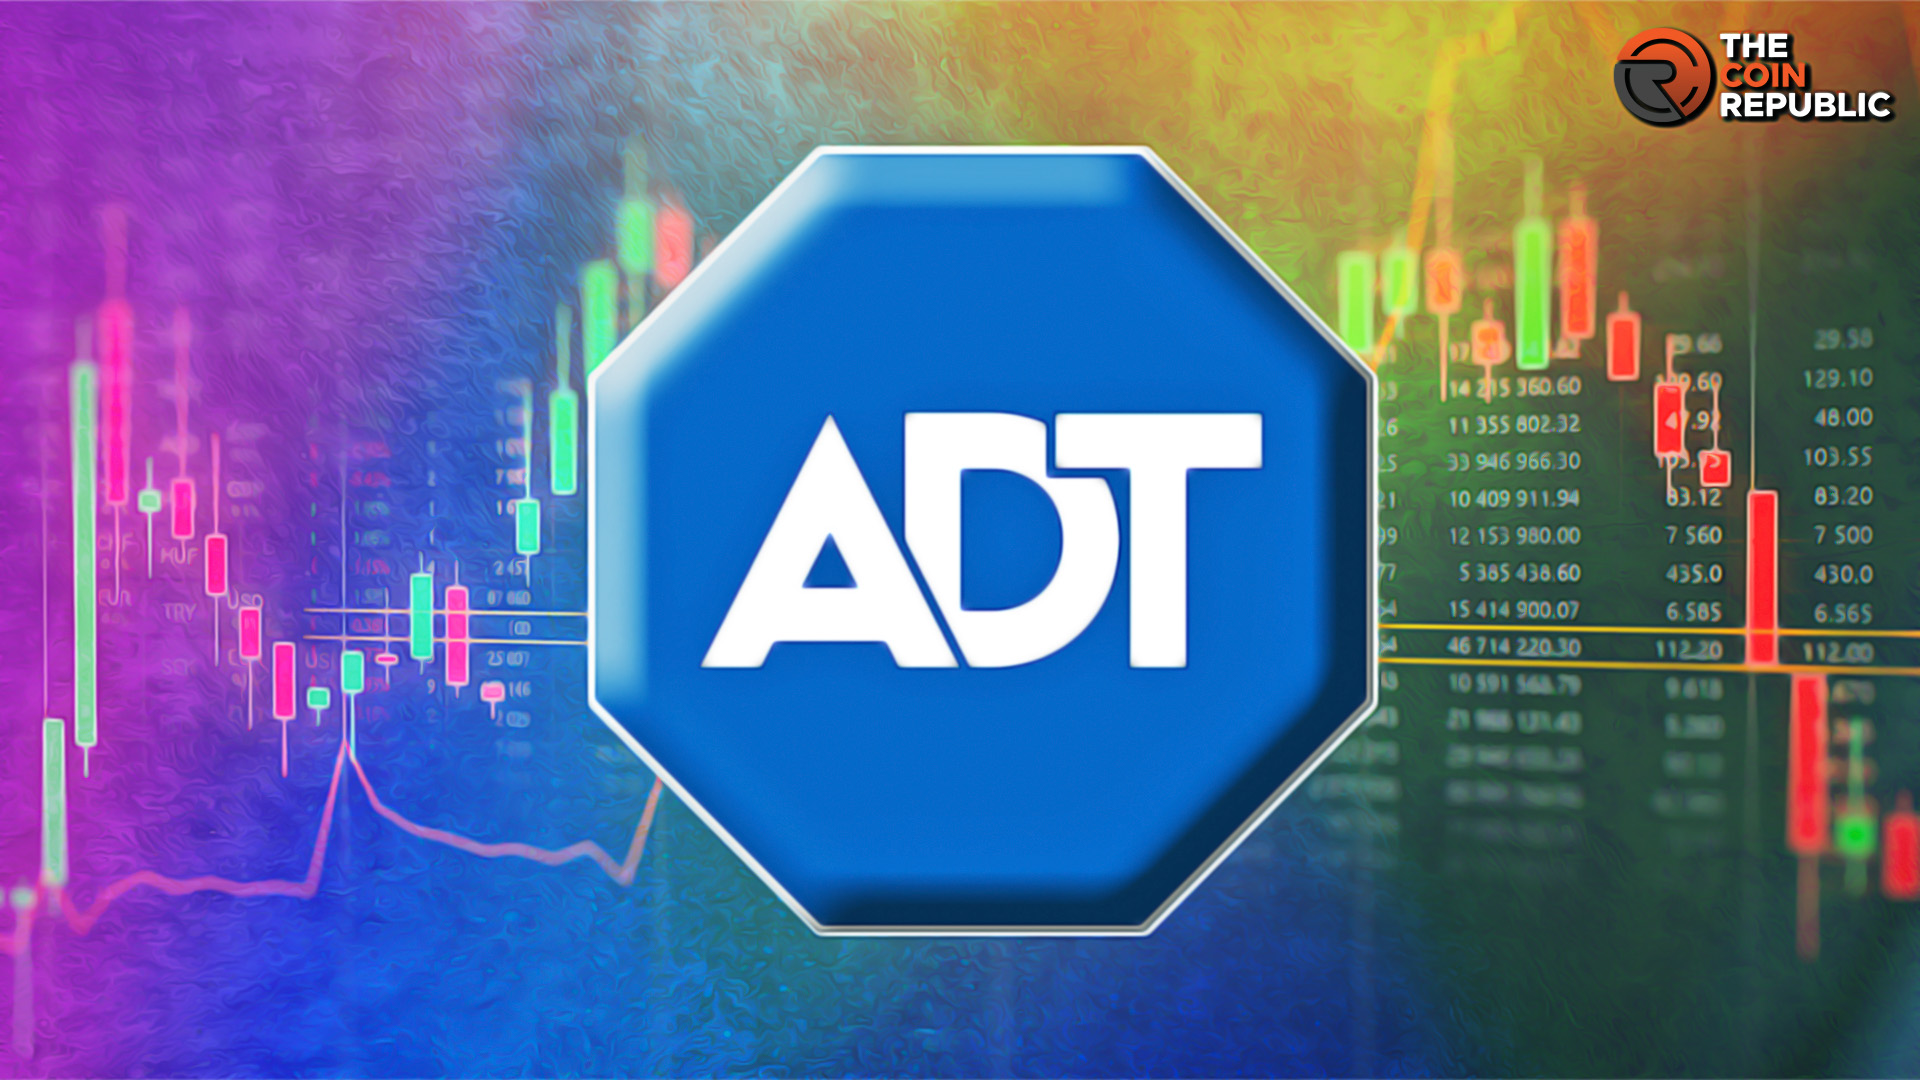 ADTX Stock Price Prediction 2023-2025: Can it Deliver 100% ROI?